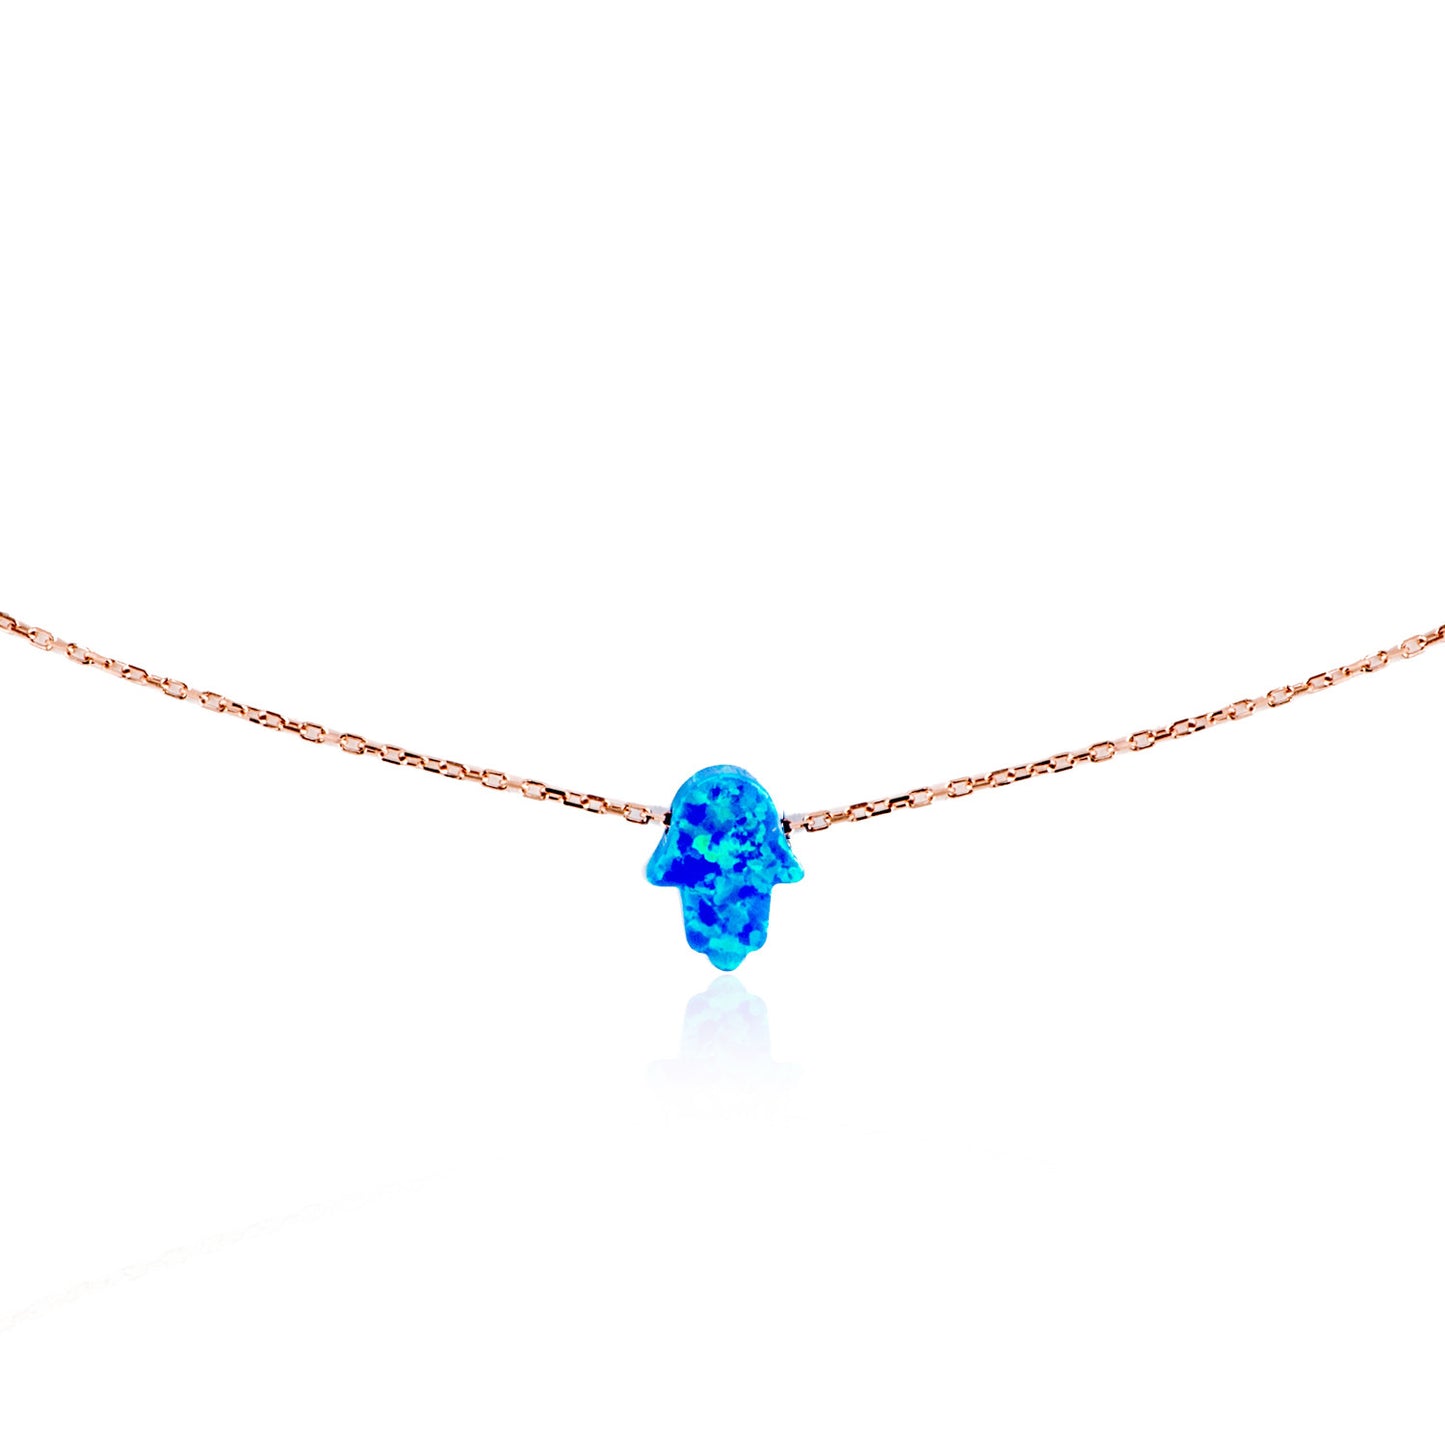 NK-510/R - Blue Opal Hamsa Necklace.